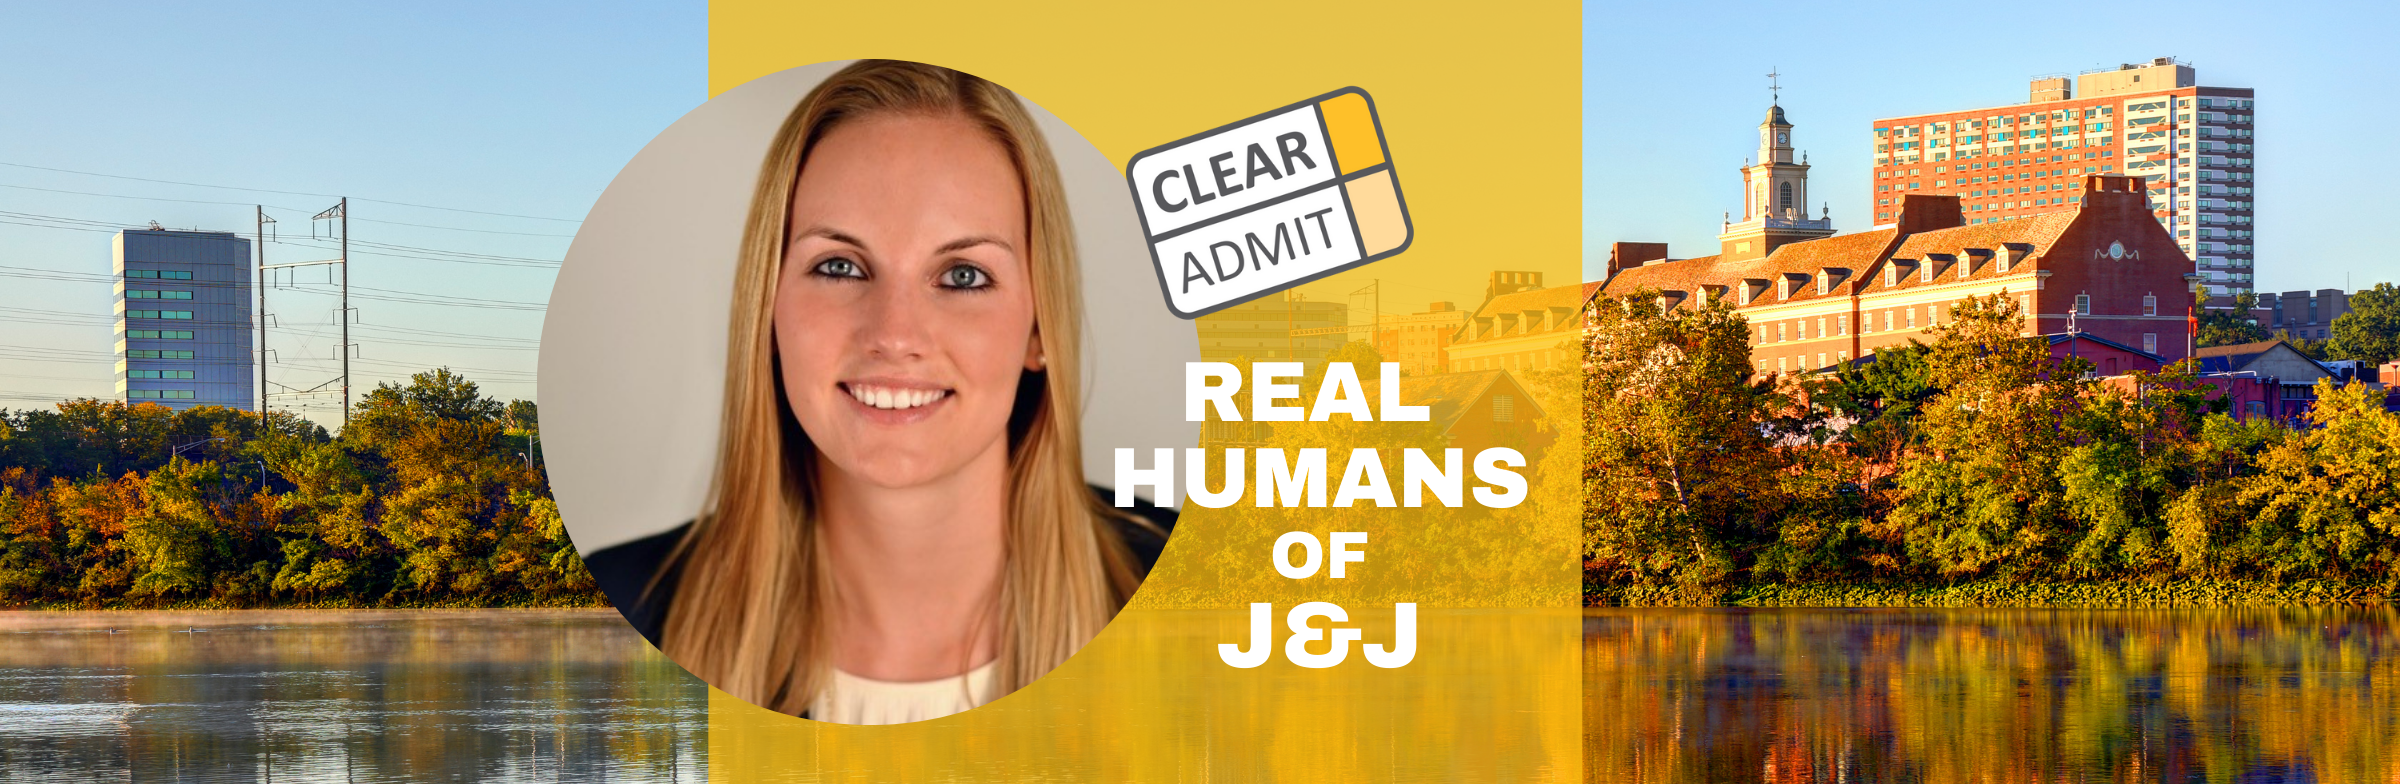 Image for Real Humans of Johnson & Johnson: Heather Dyer, Harvard ‘17, Senior Product Manager, Robotics & Digital Solutions